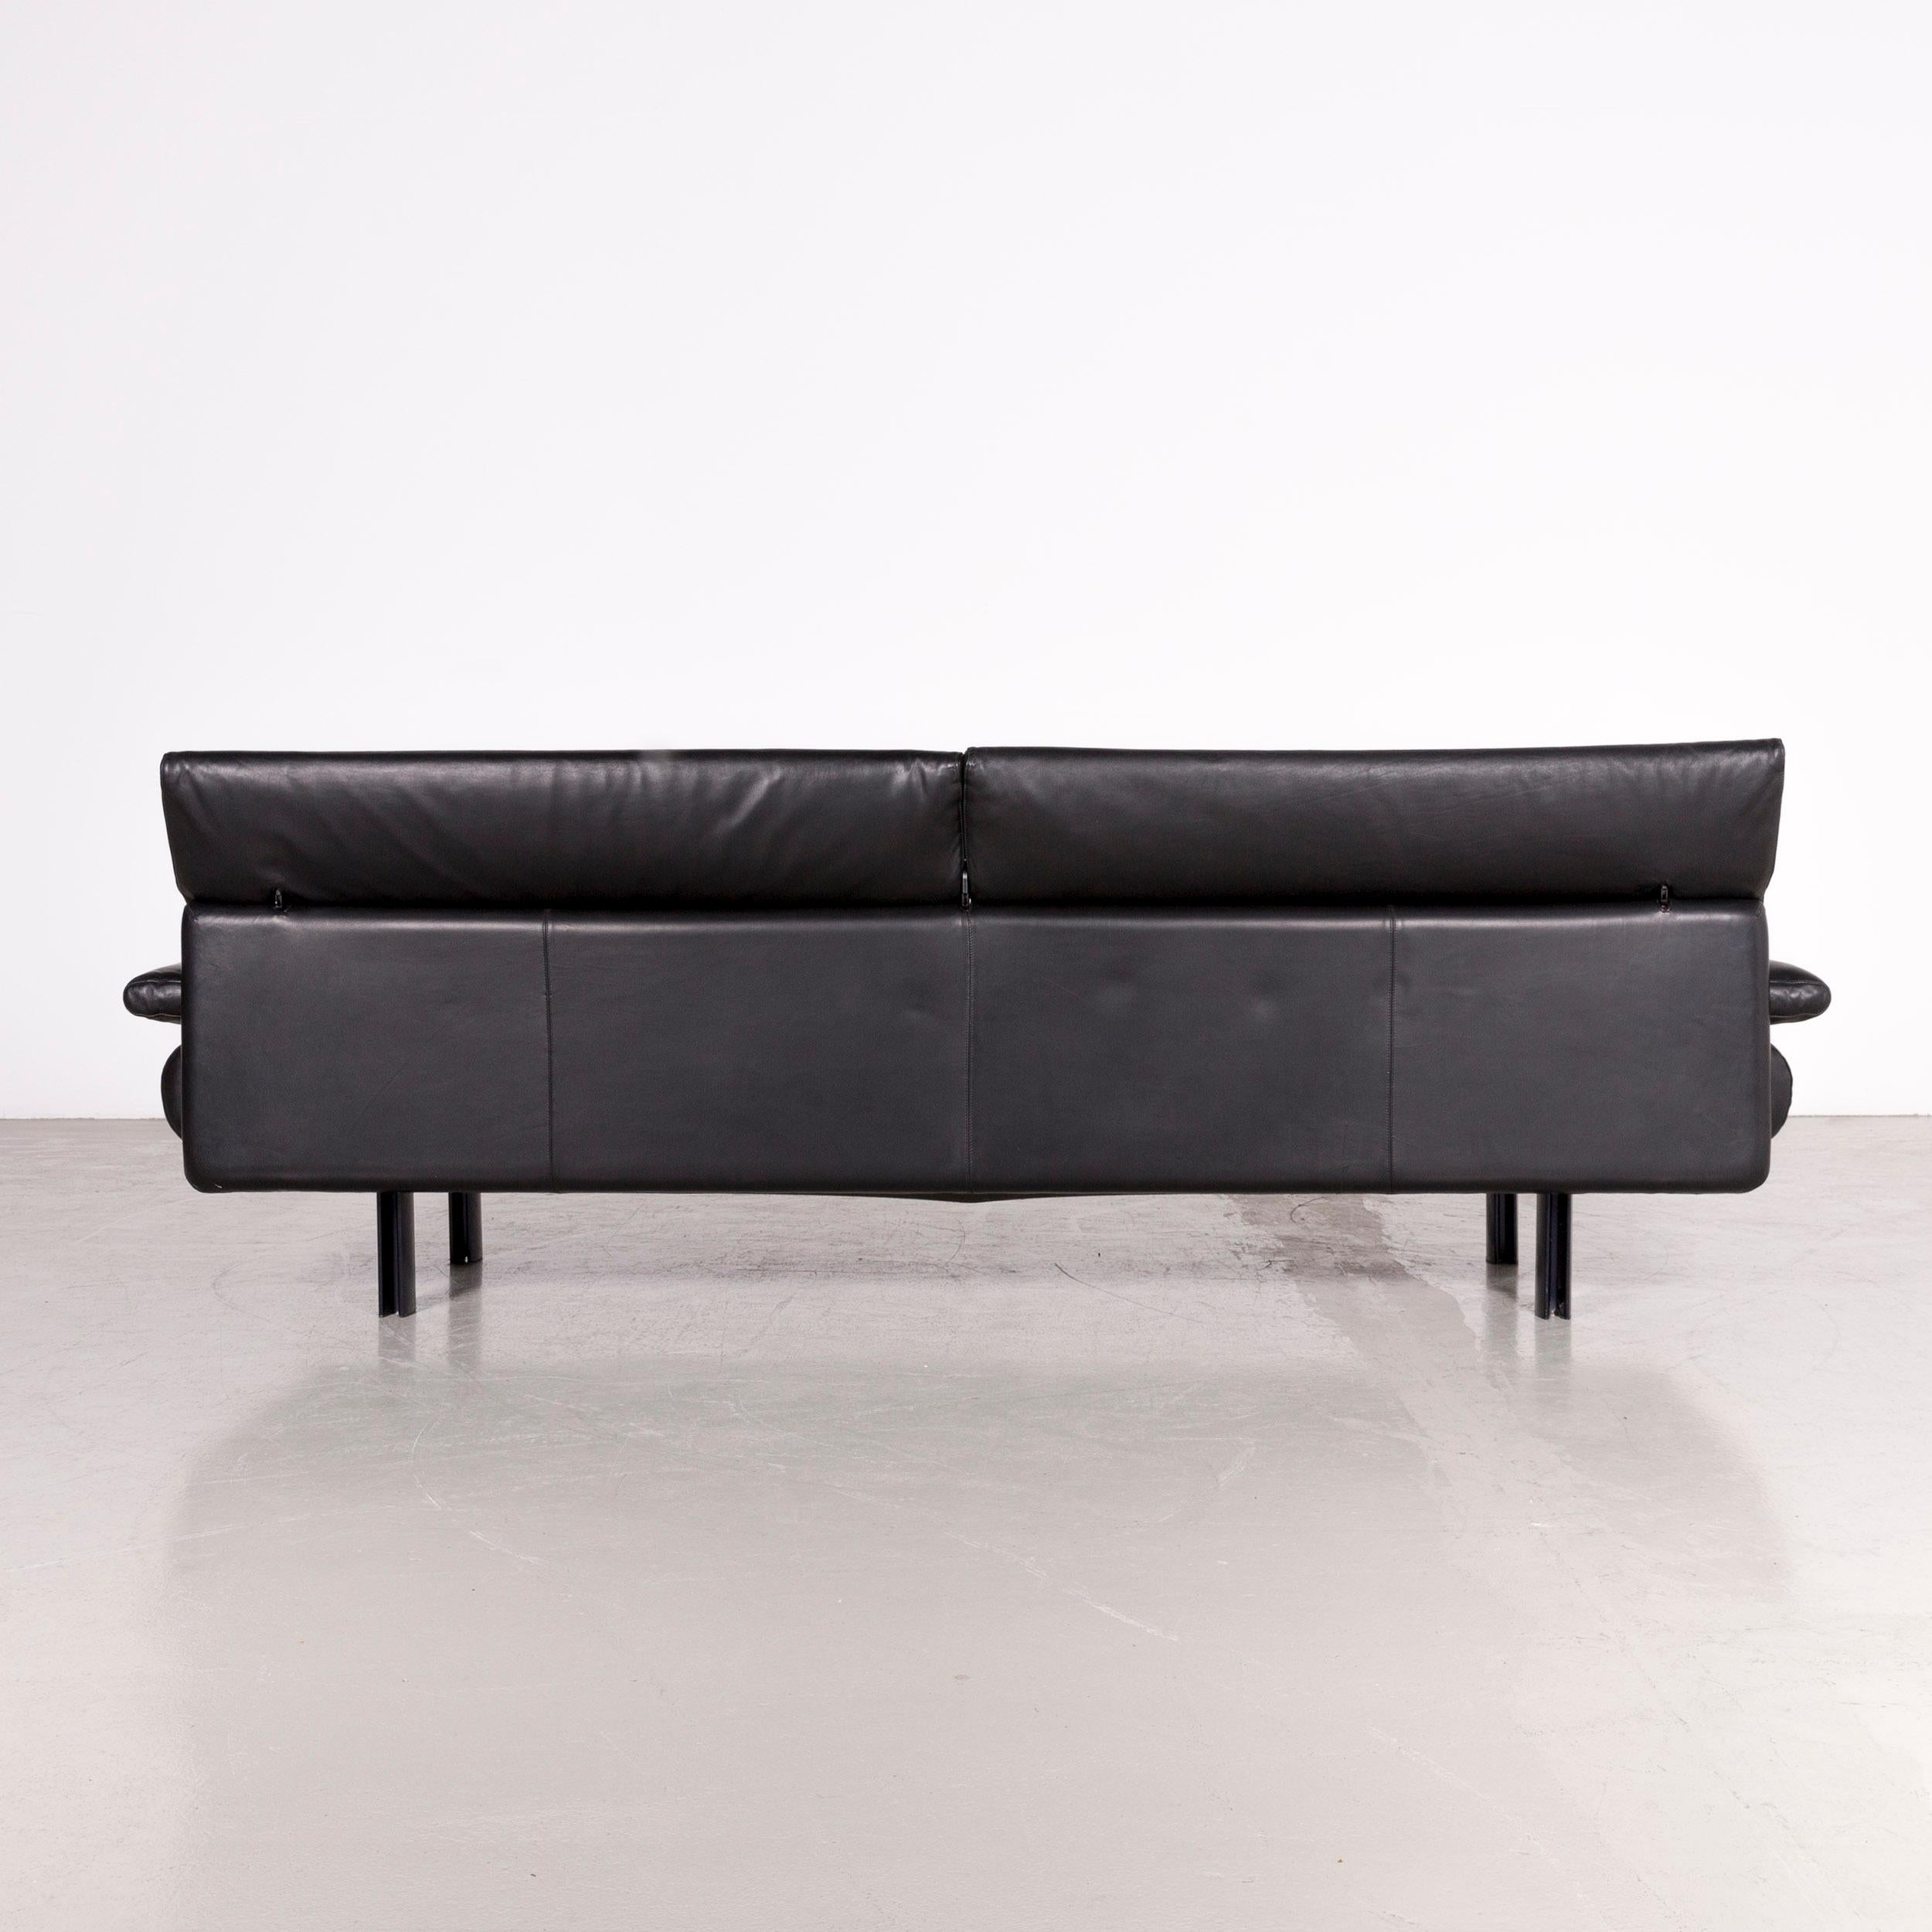 B&B Italia Alanda Designer Leather Sofa Black Three-Seat Couch Relax For Sale 3